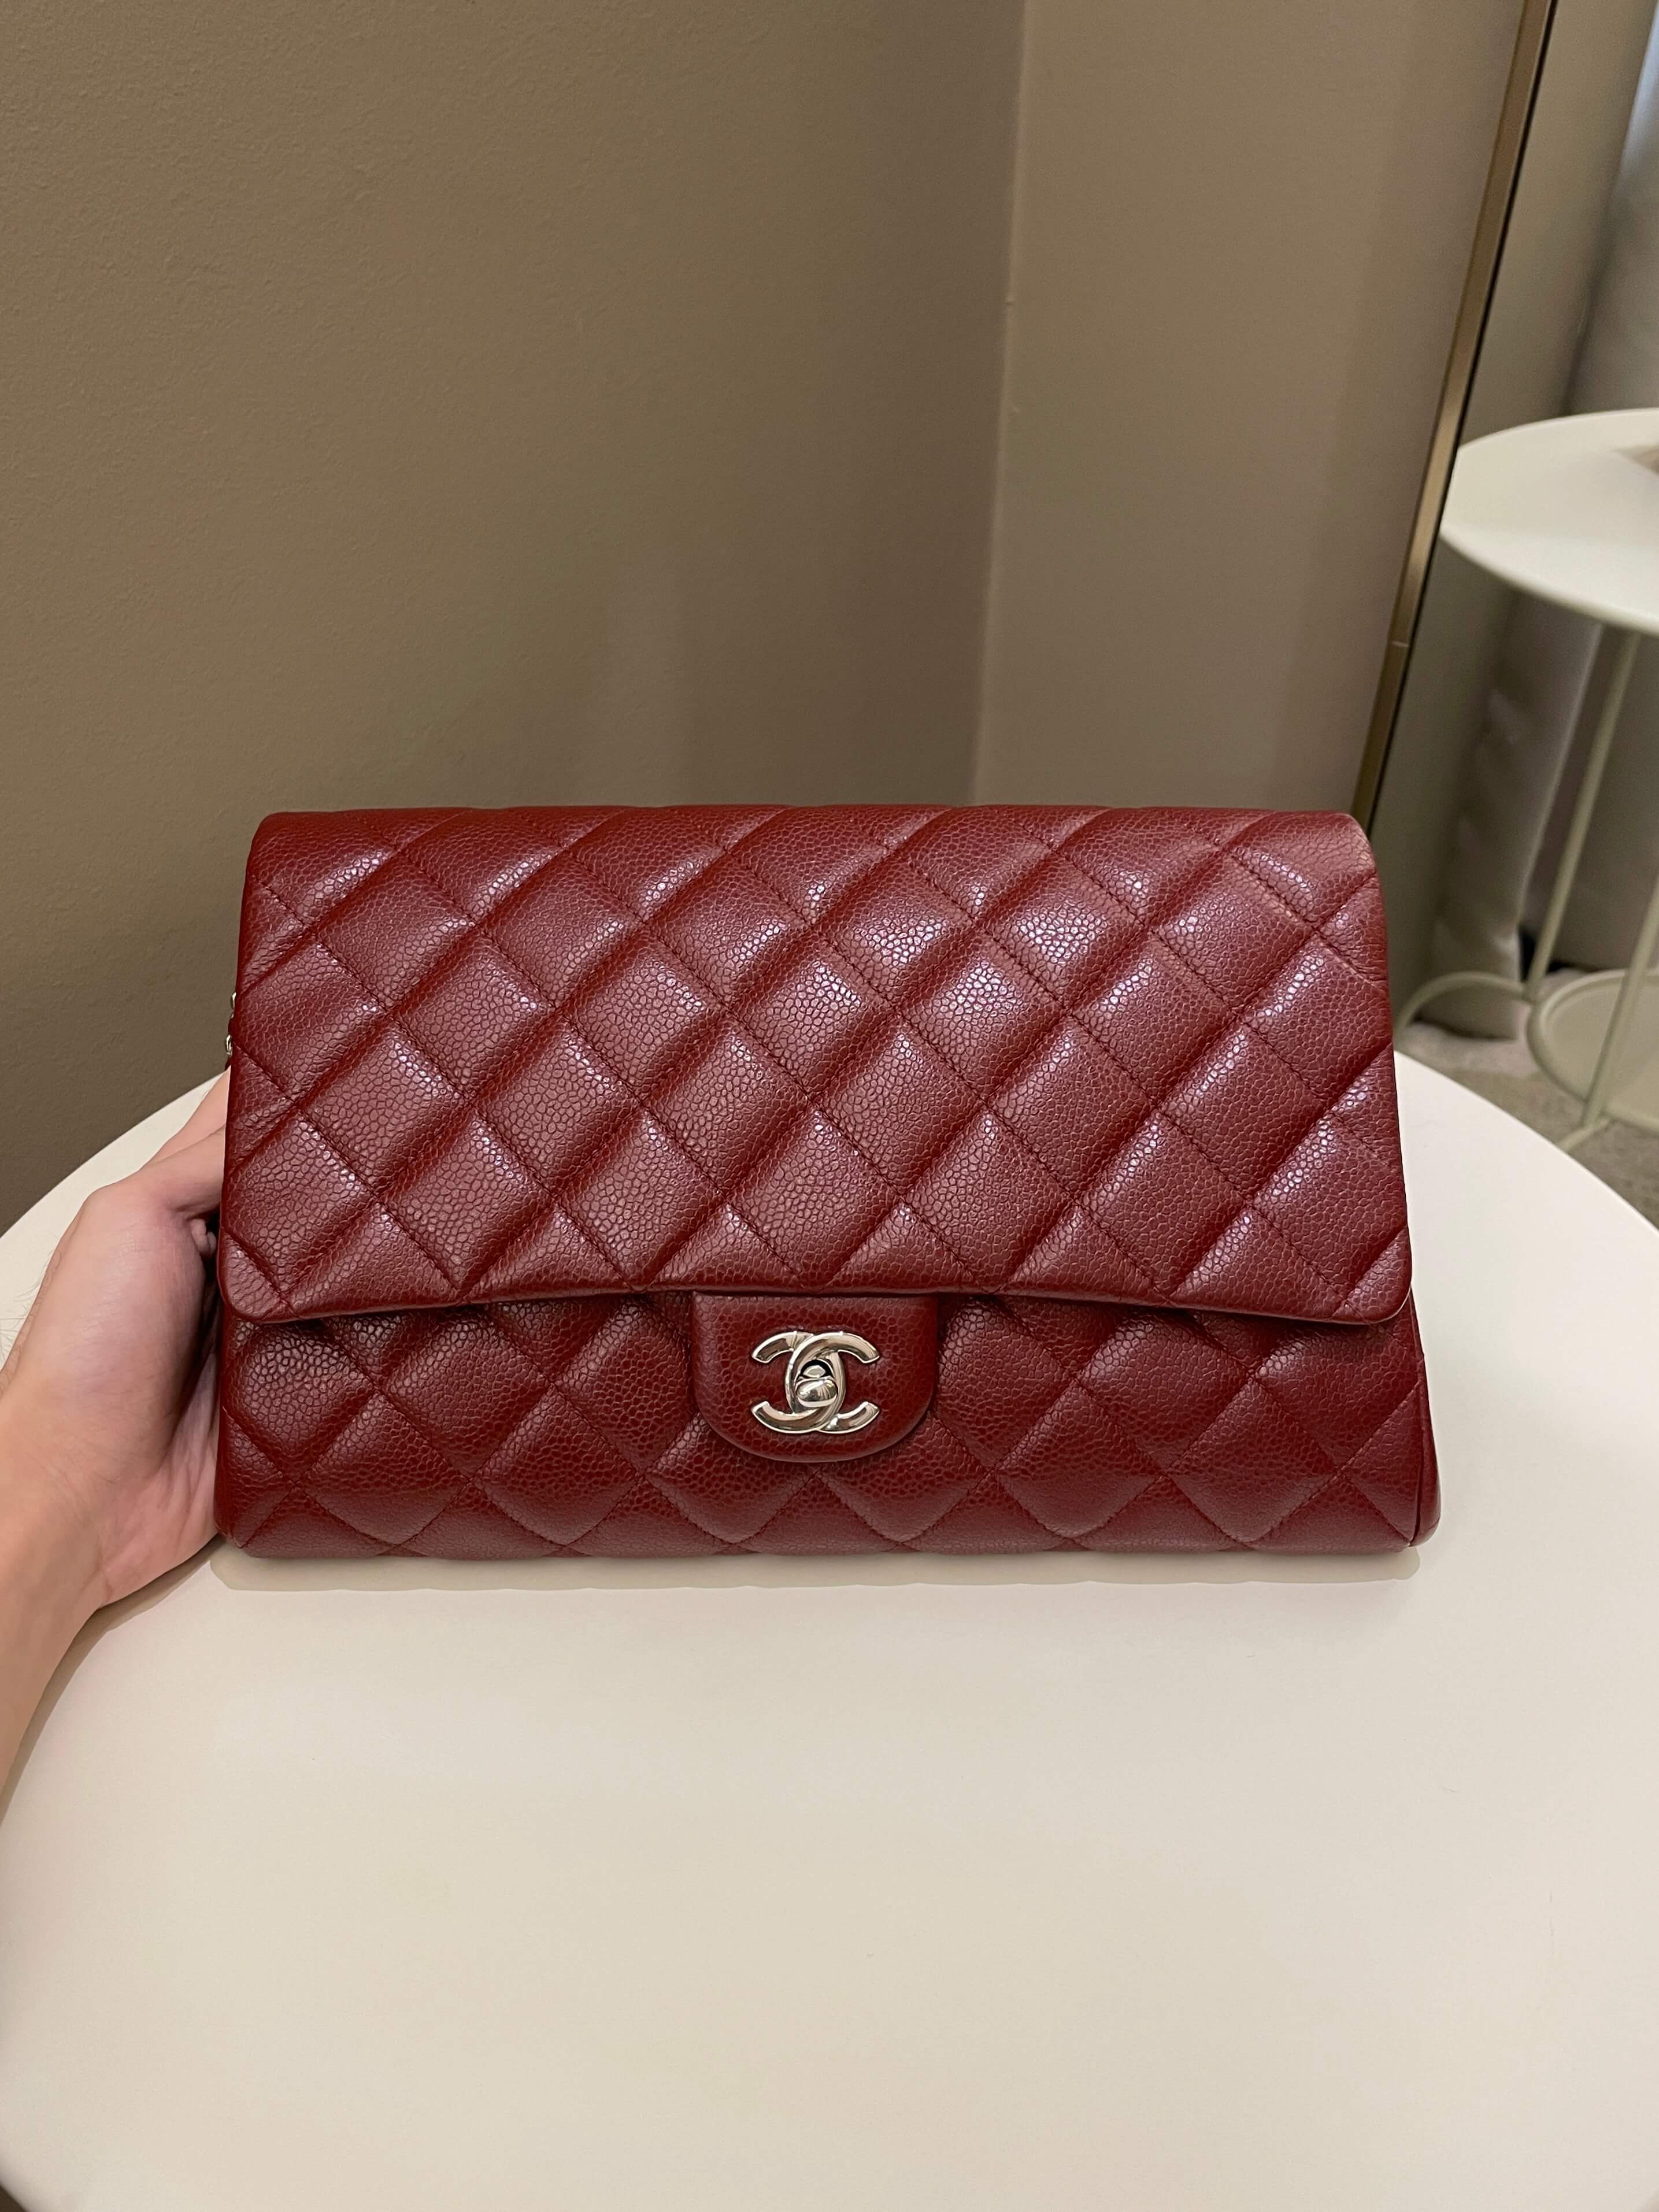 chanel small handbag classic